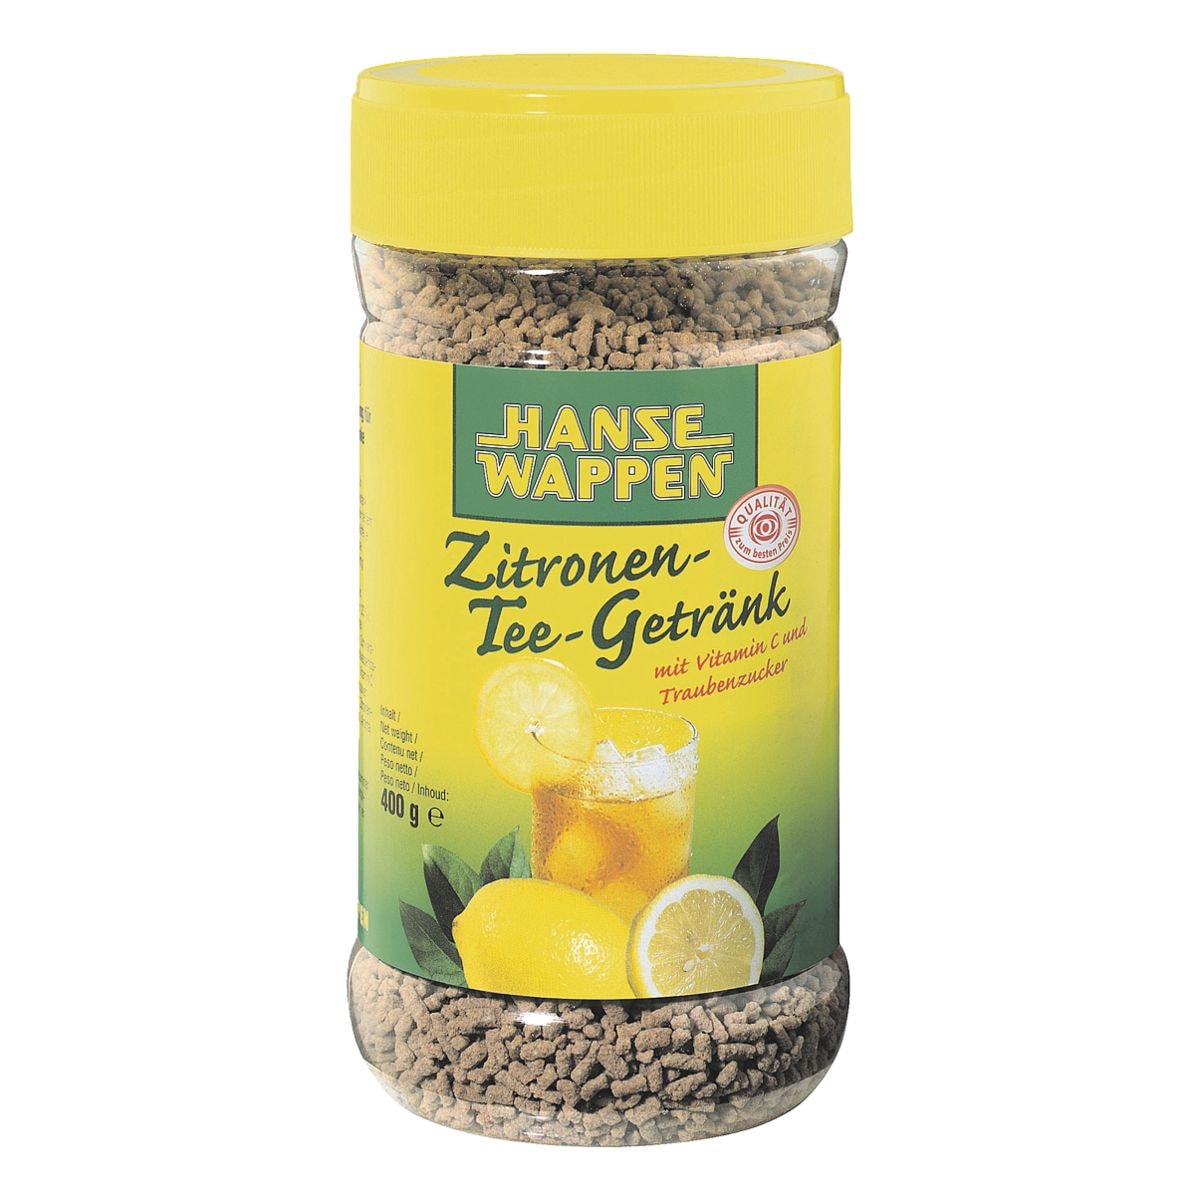 Hansewappen »Zitronen-Tee-Getränk« - Bei OTTO Office günstig kaufen.